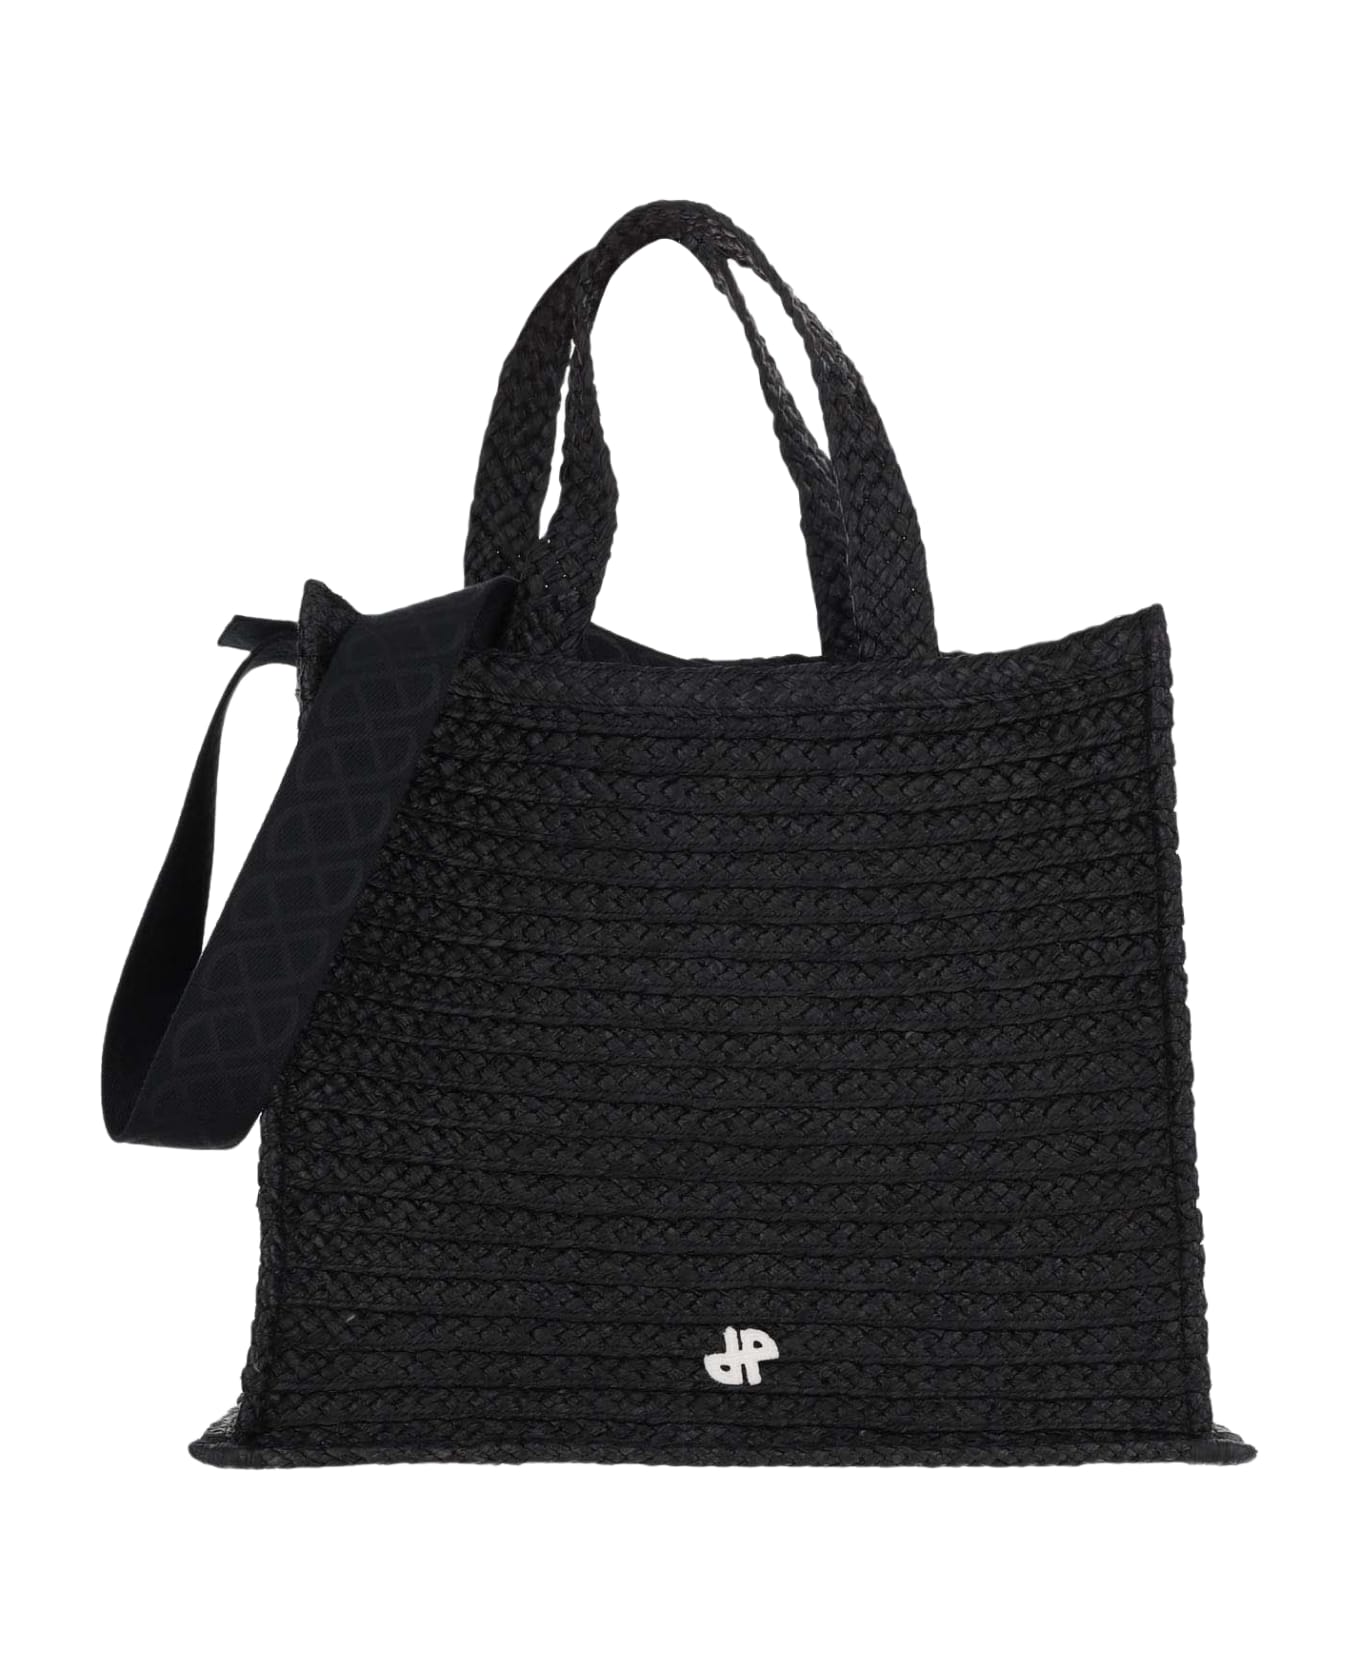 Patou Large Jp Tote Bag - Black